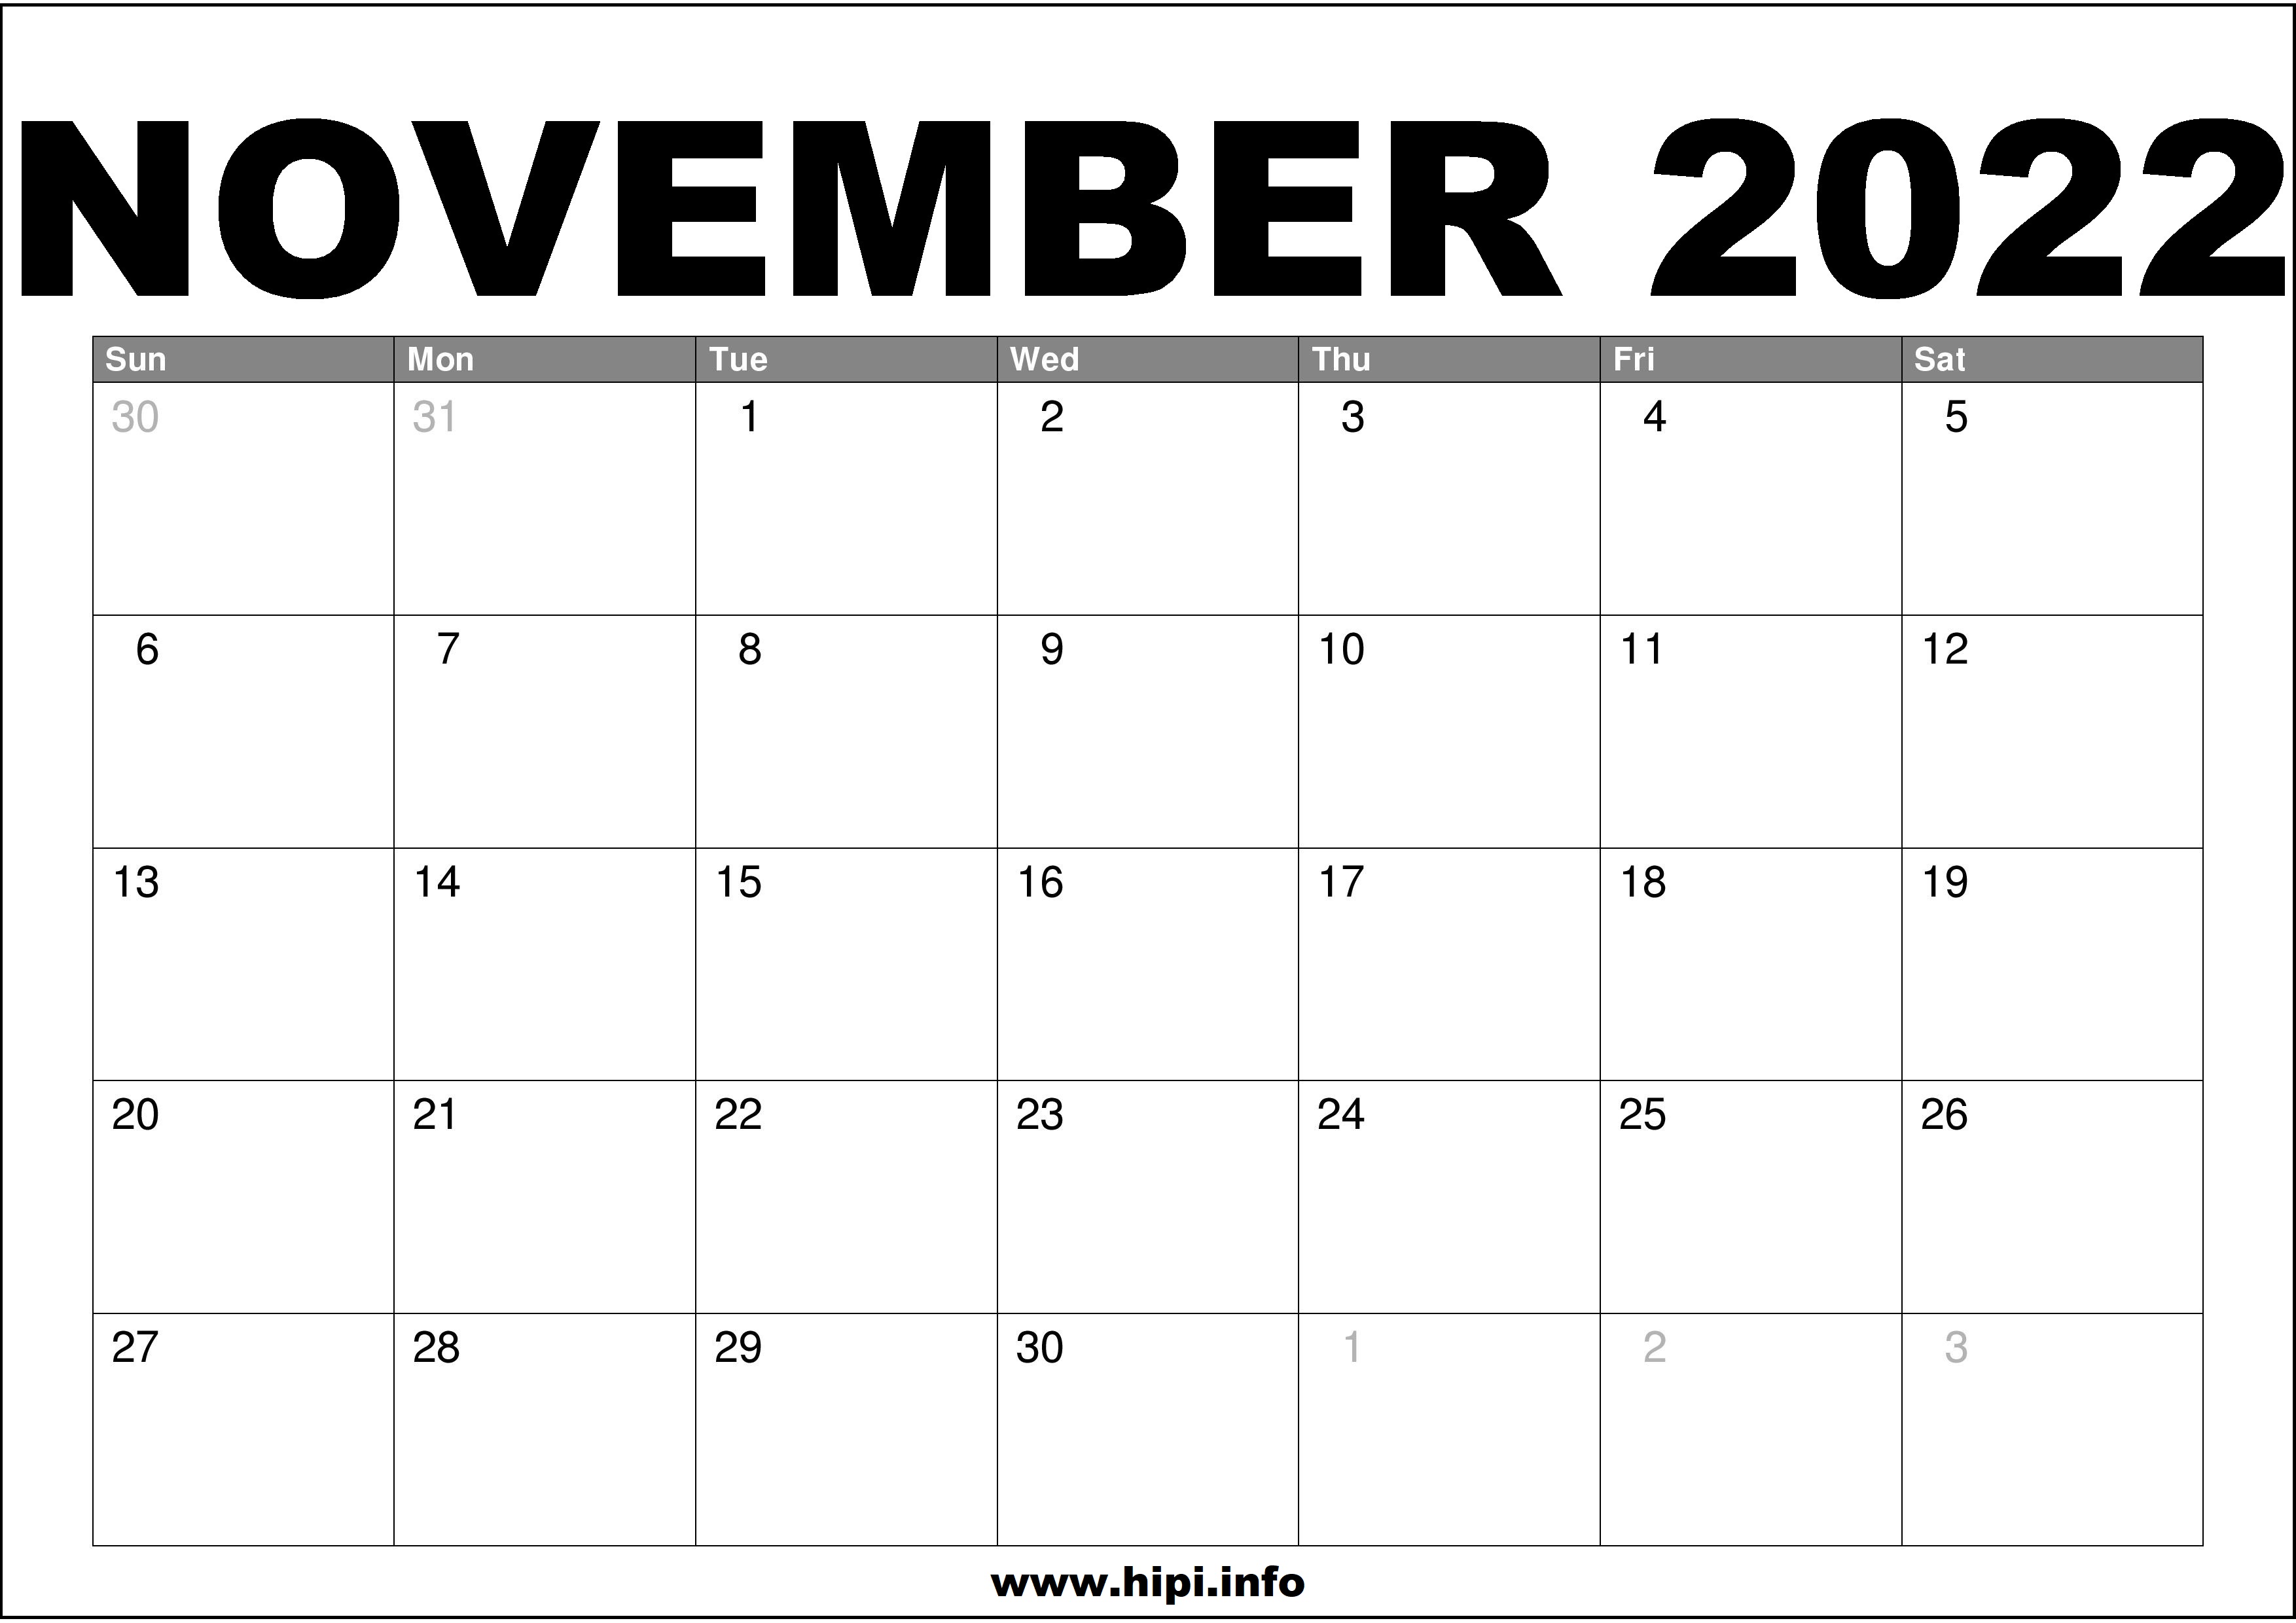 Free Printable November Calendar 2022 November 2022 Calendar Printable Free - Hipi.info | Calendars Printable Free